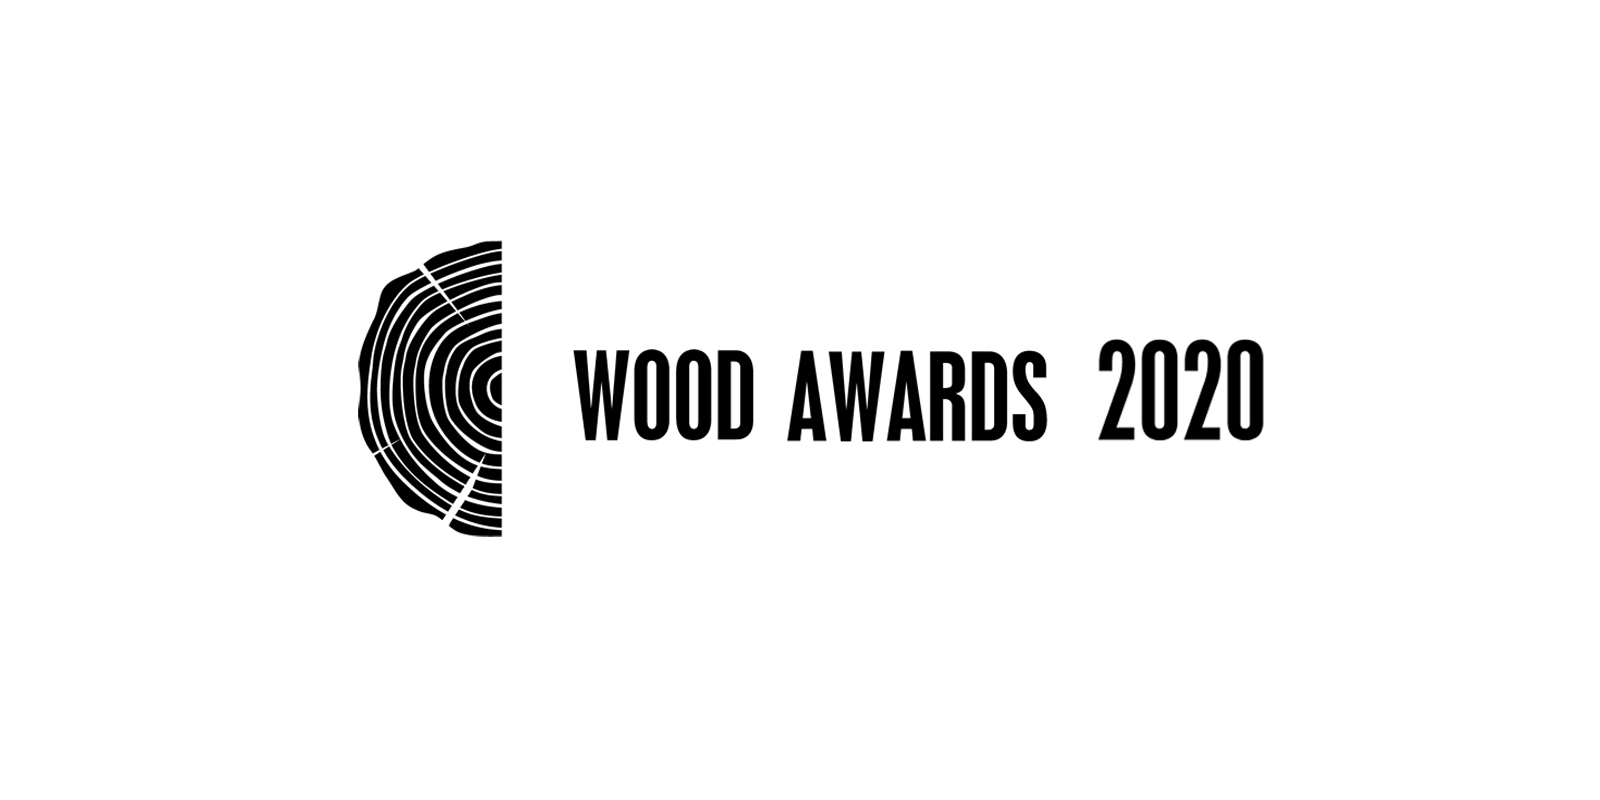 Archisearch Wood Awards: Ανακοινώθηκαν οι νικητές του νέου θεσμού για την ανάδειξη του ξύλου